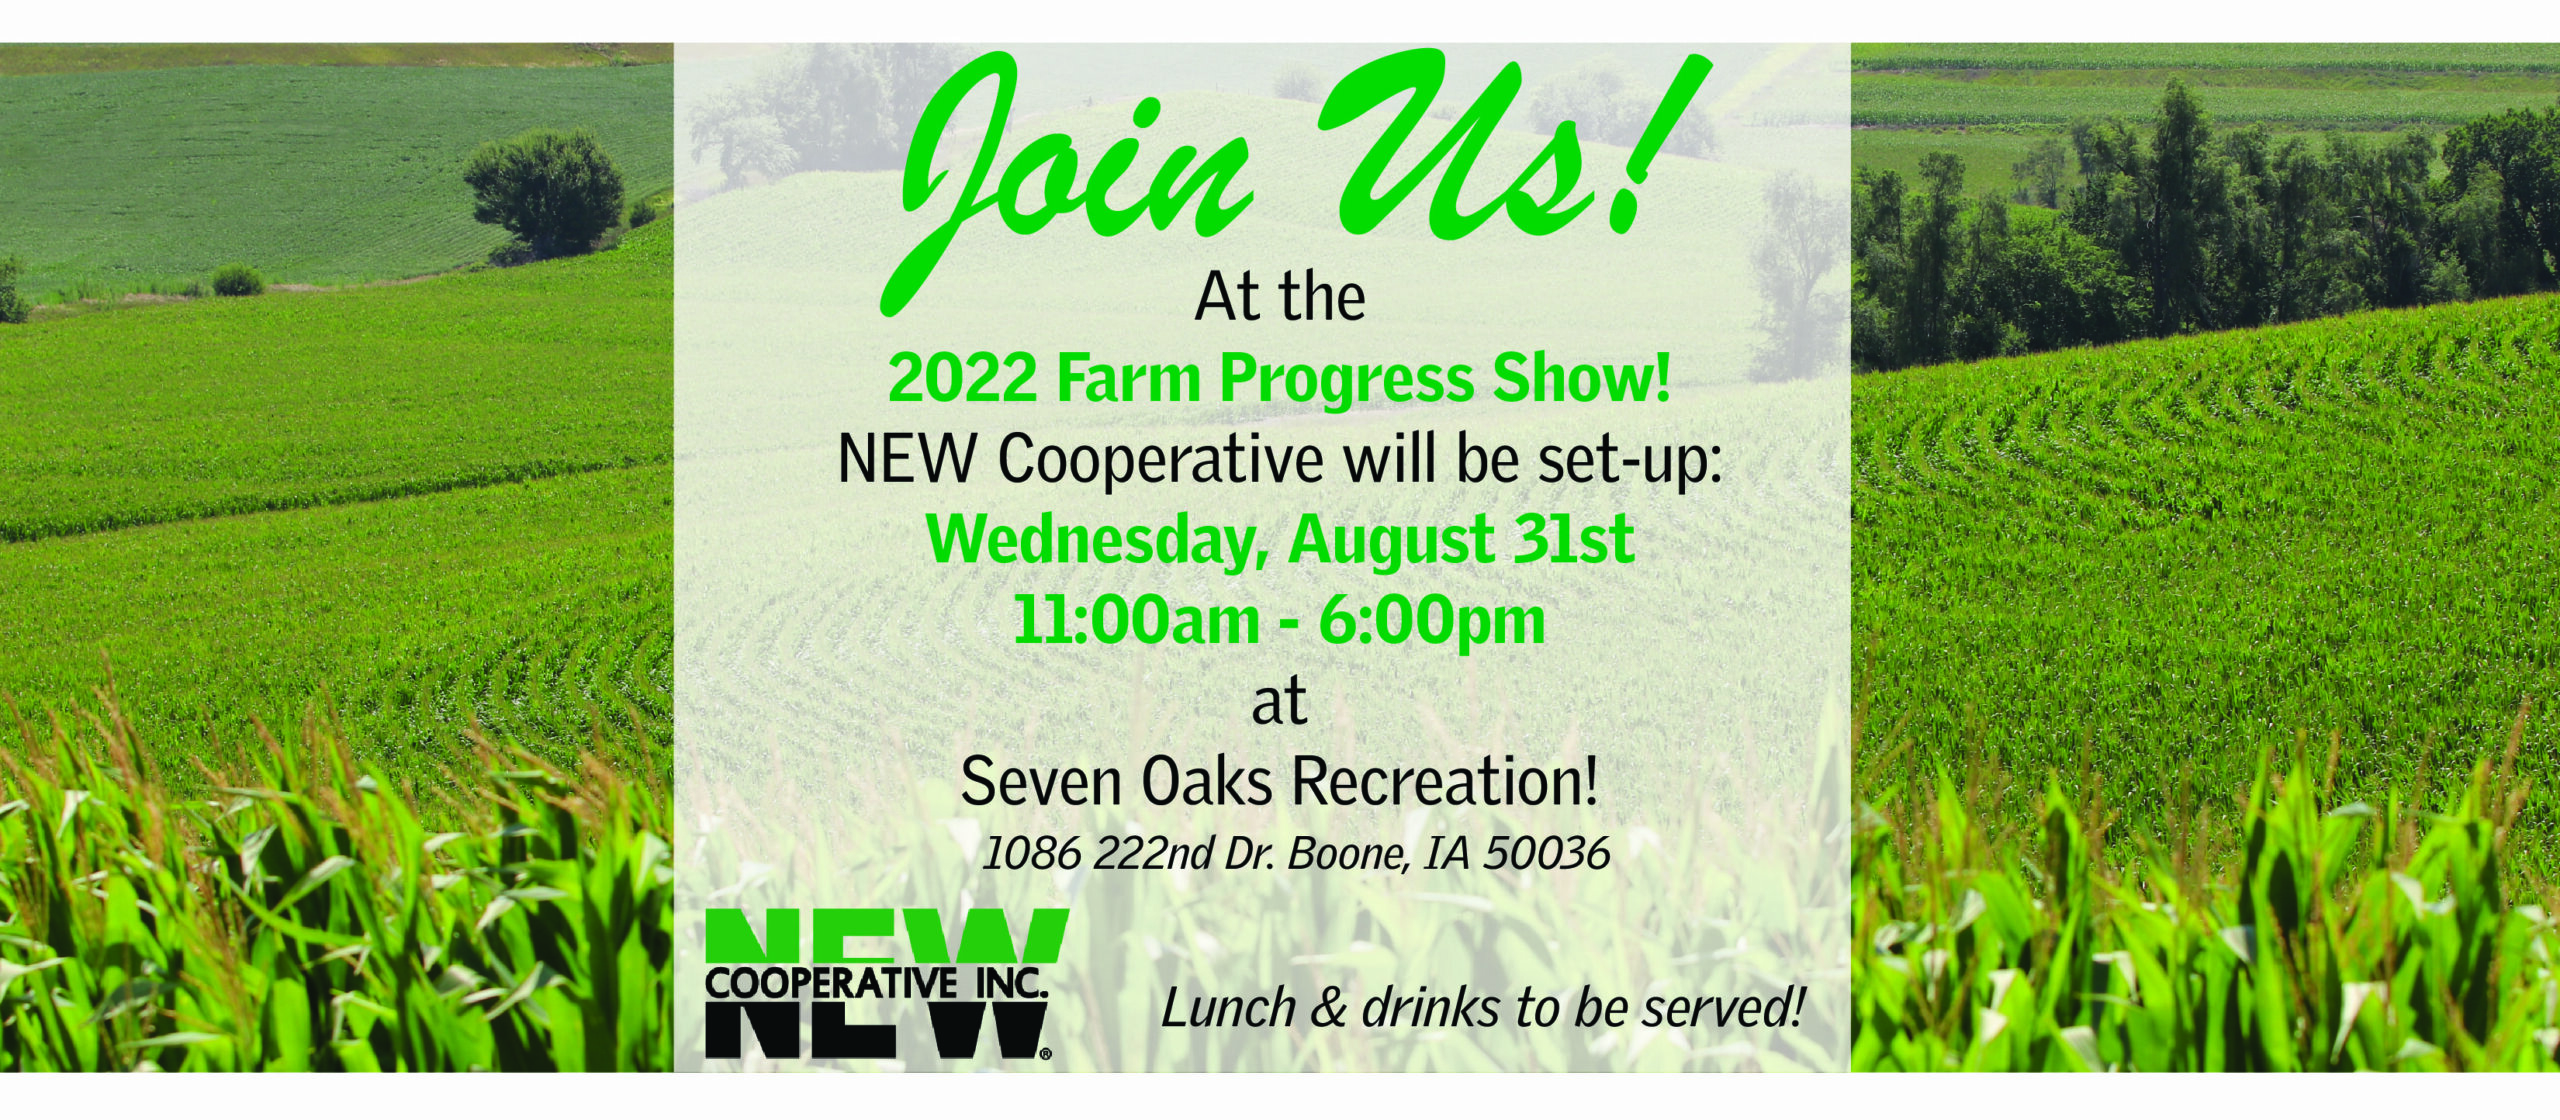 NEW Cooperative To Attend Farm Progress Show NEW Cooperative Inc.